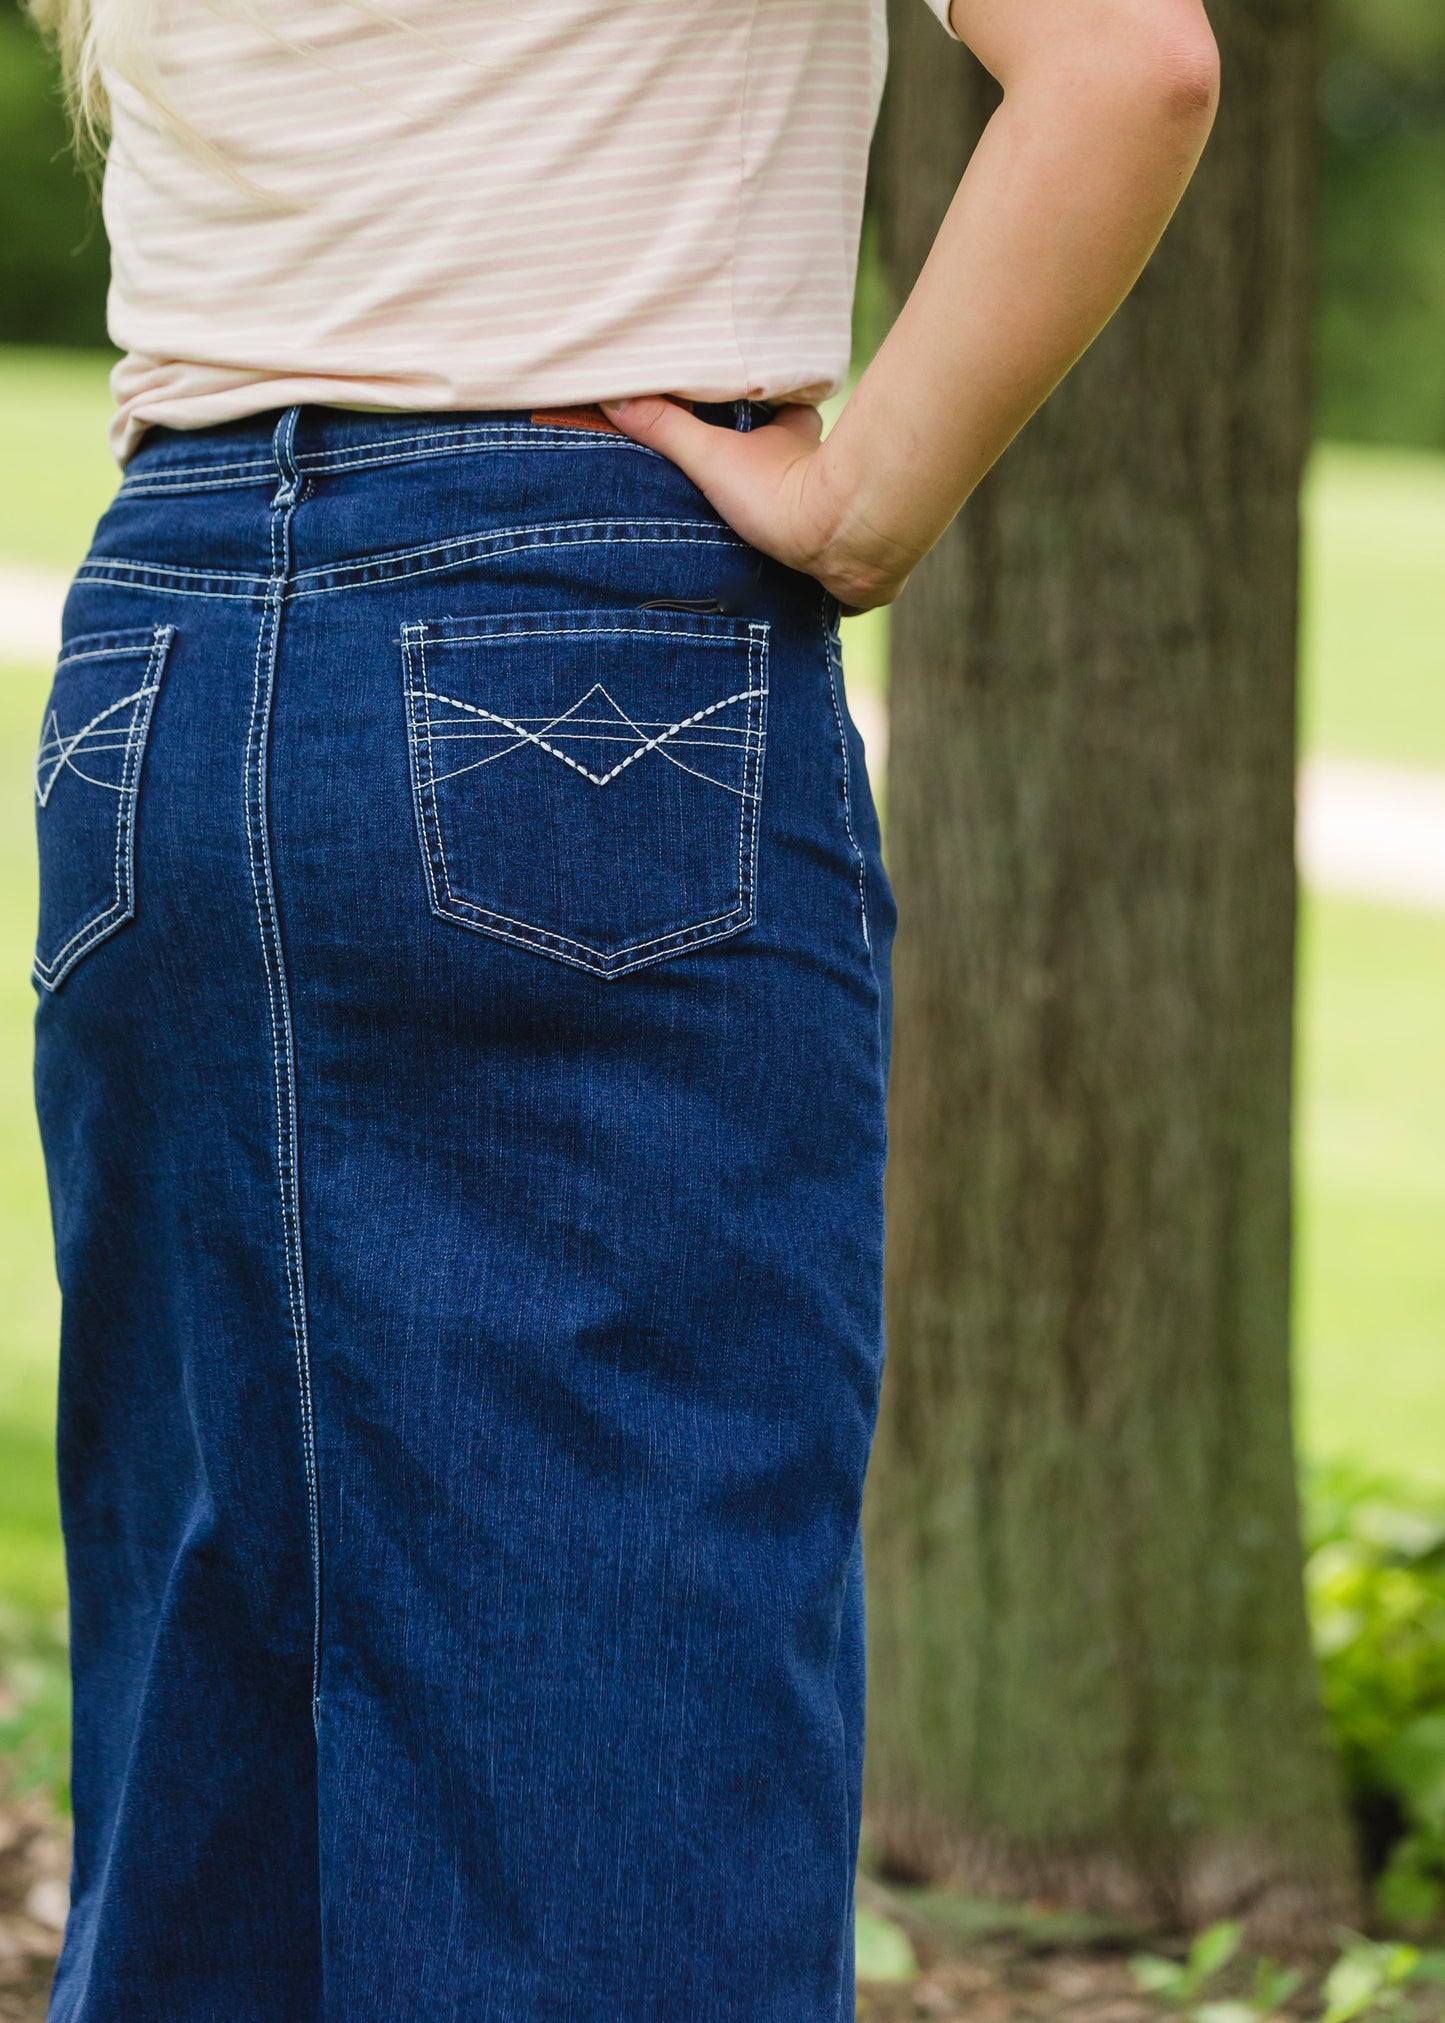 Natalie Dark Denim Long Jean Skirt - FINAL SALE Skirts